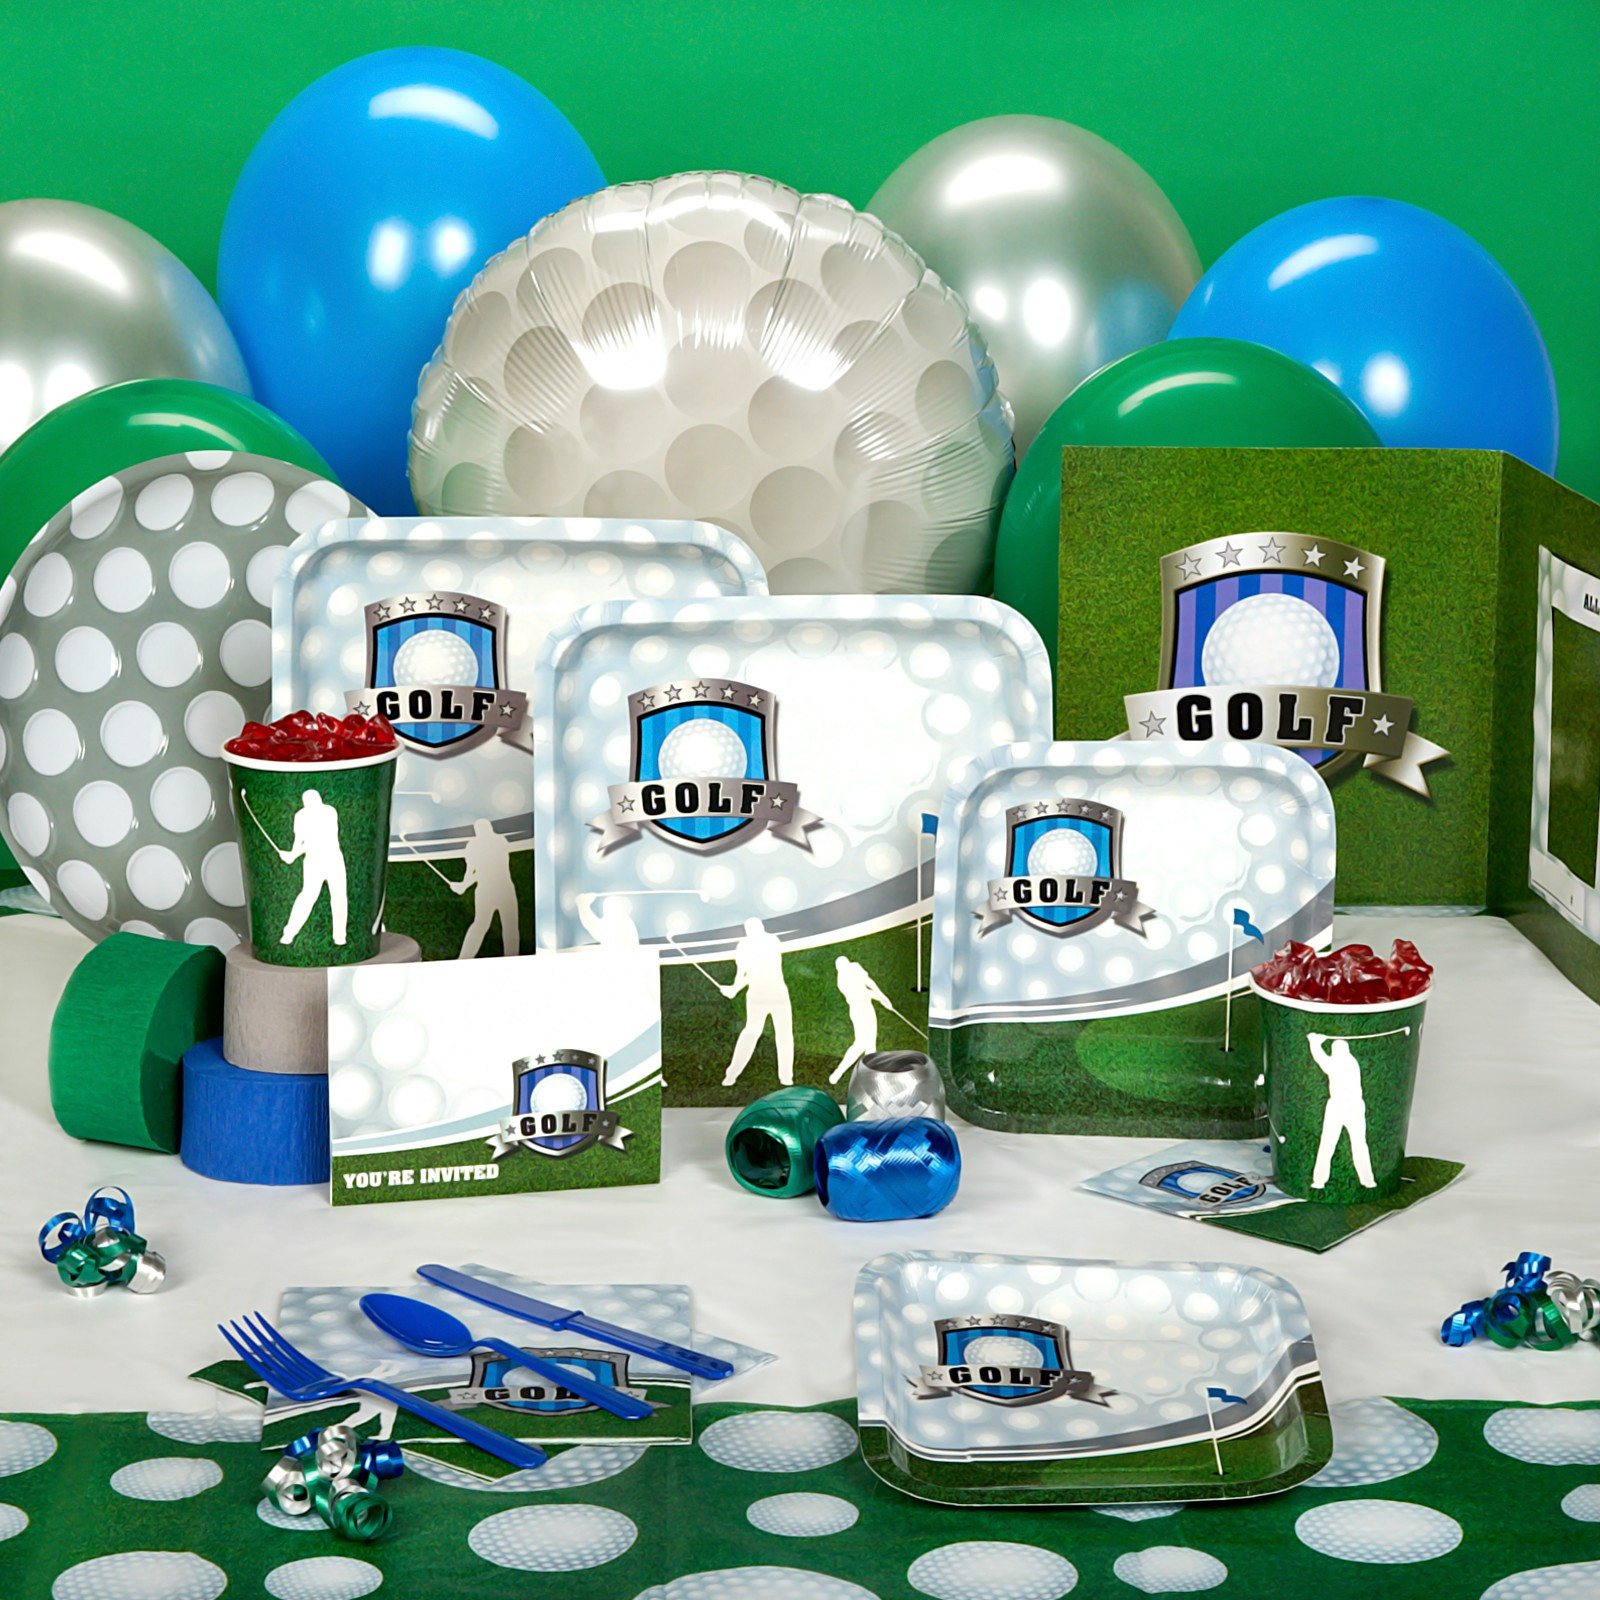 Golfing Birthday Party Ideas
 Bear River Greetings Golf Birthday Party Invitation